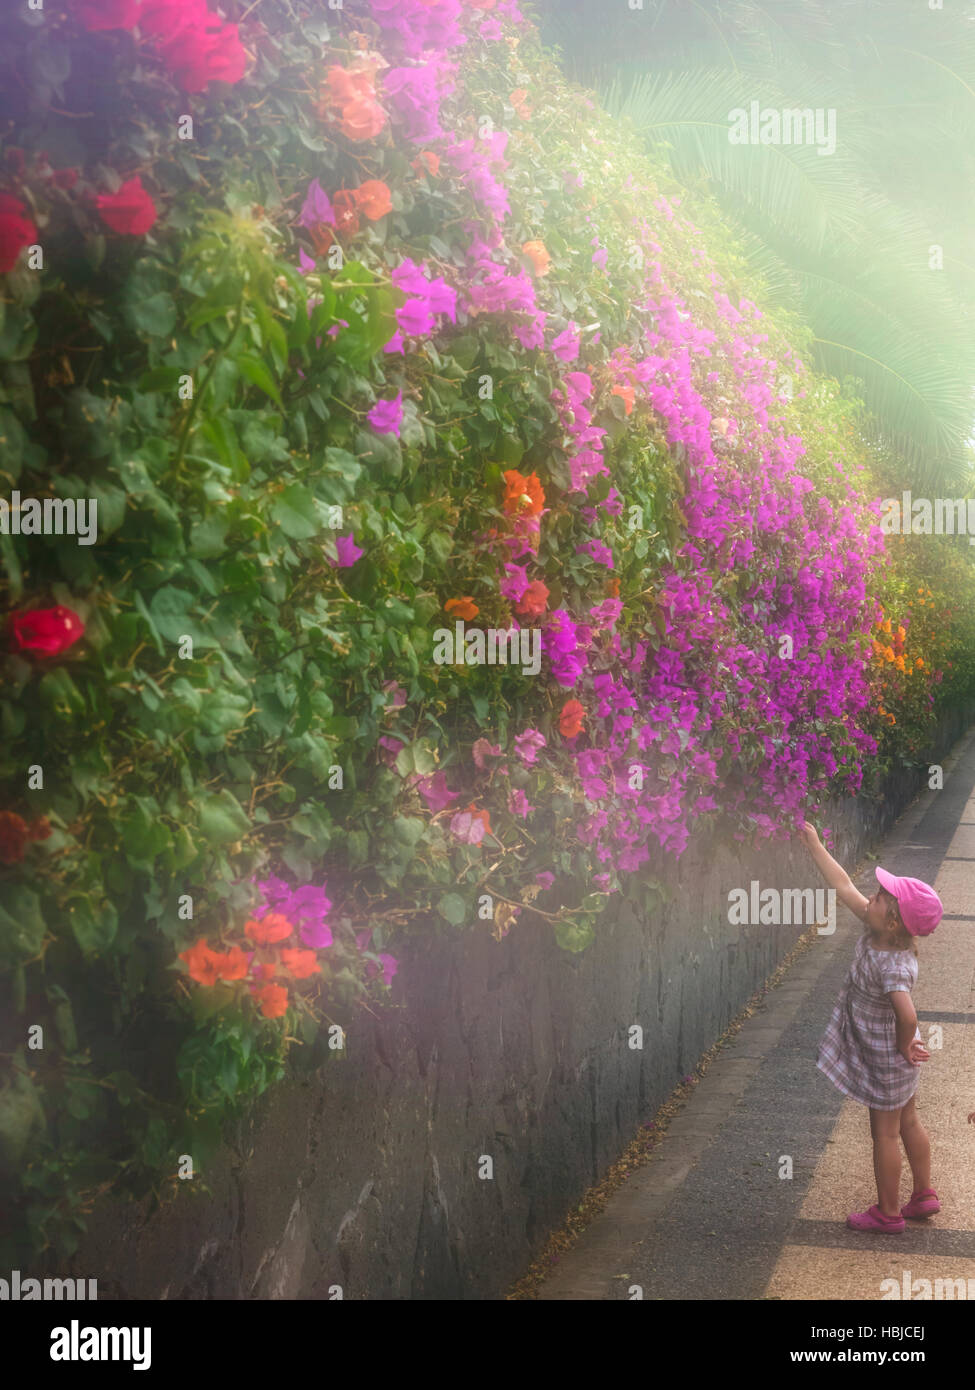 Girl picking flowers in mist Stock Photo